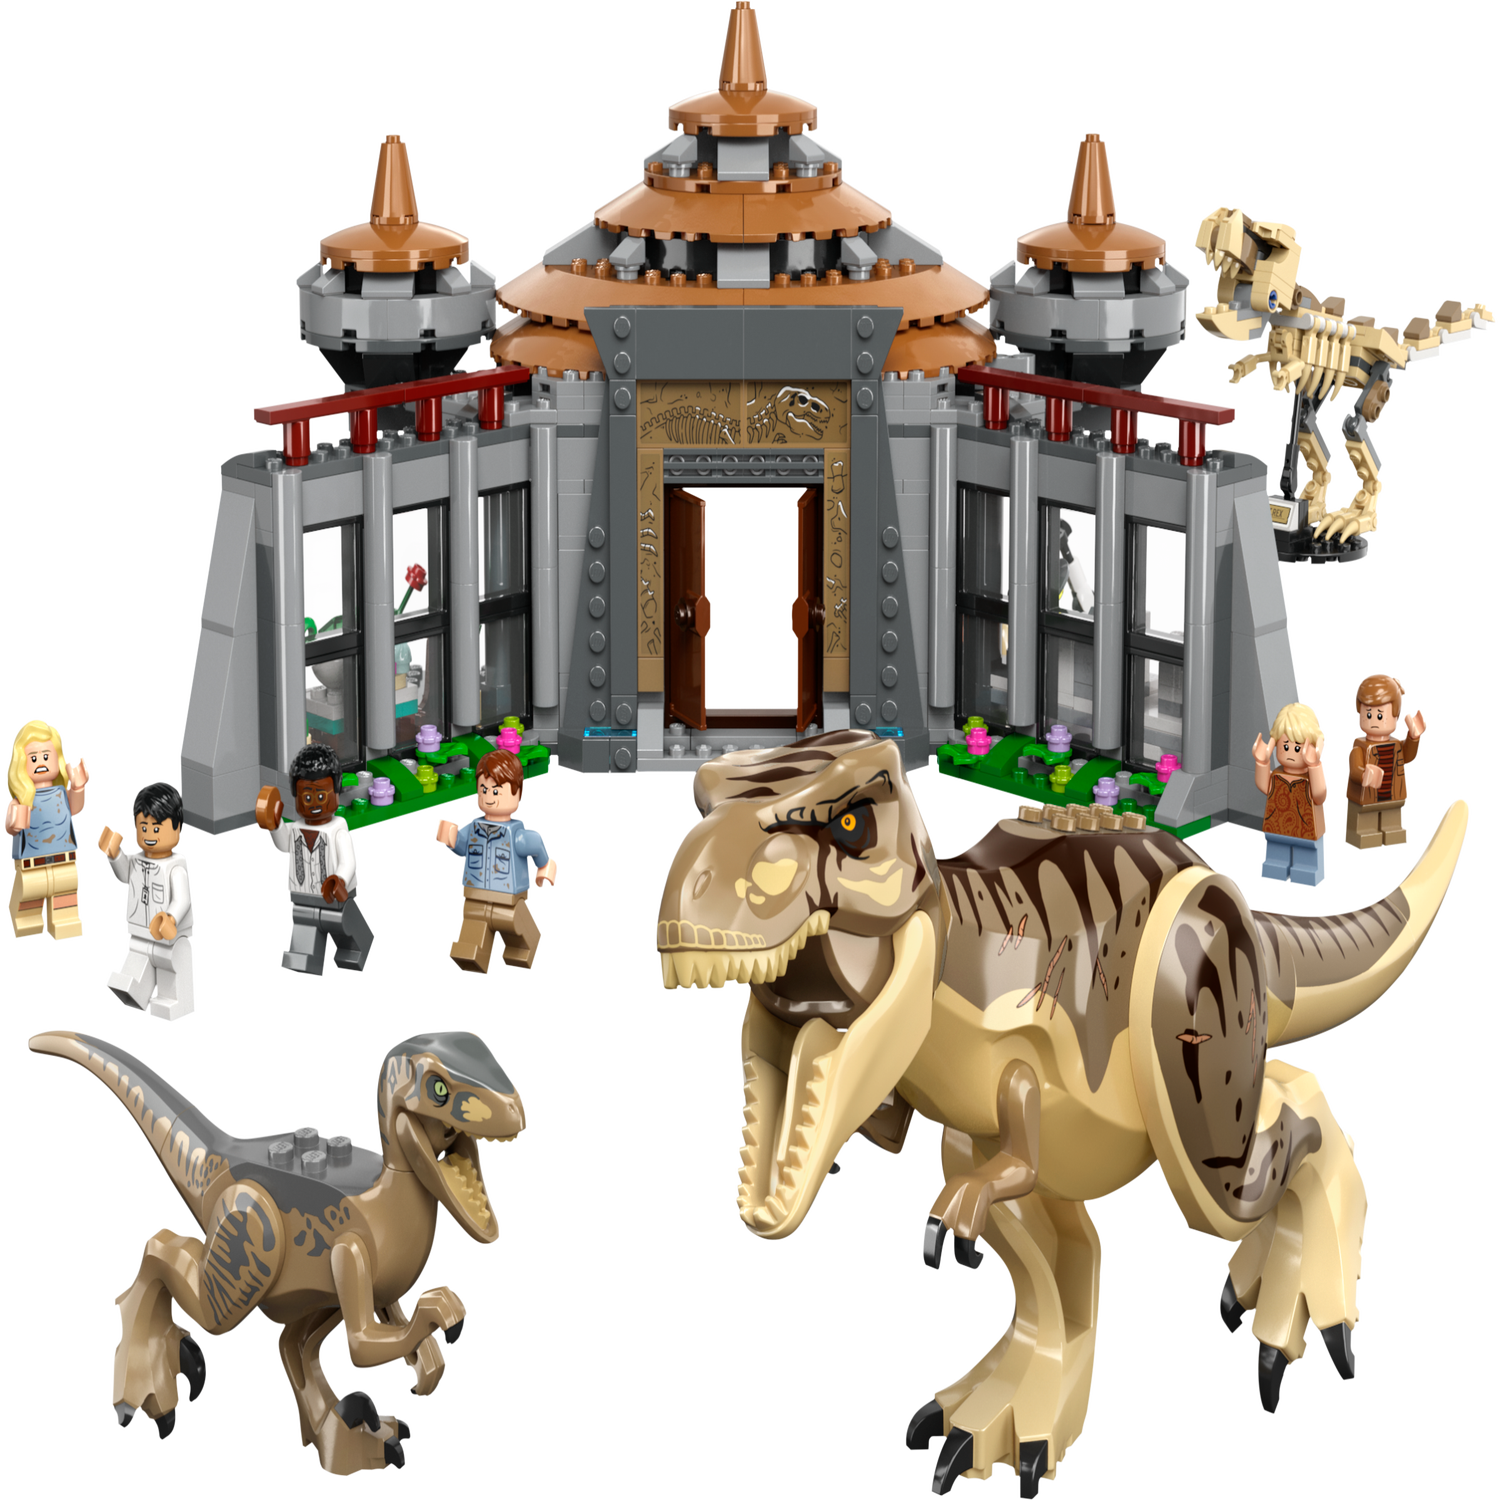 LEGO Jurassic World Visitor Centre T Rex & Raptor Attack 76961